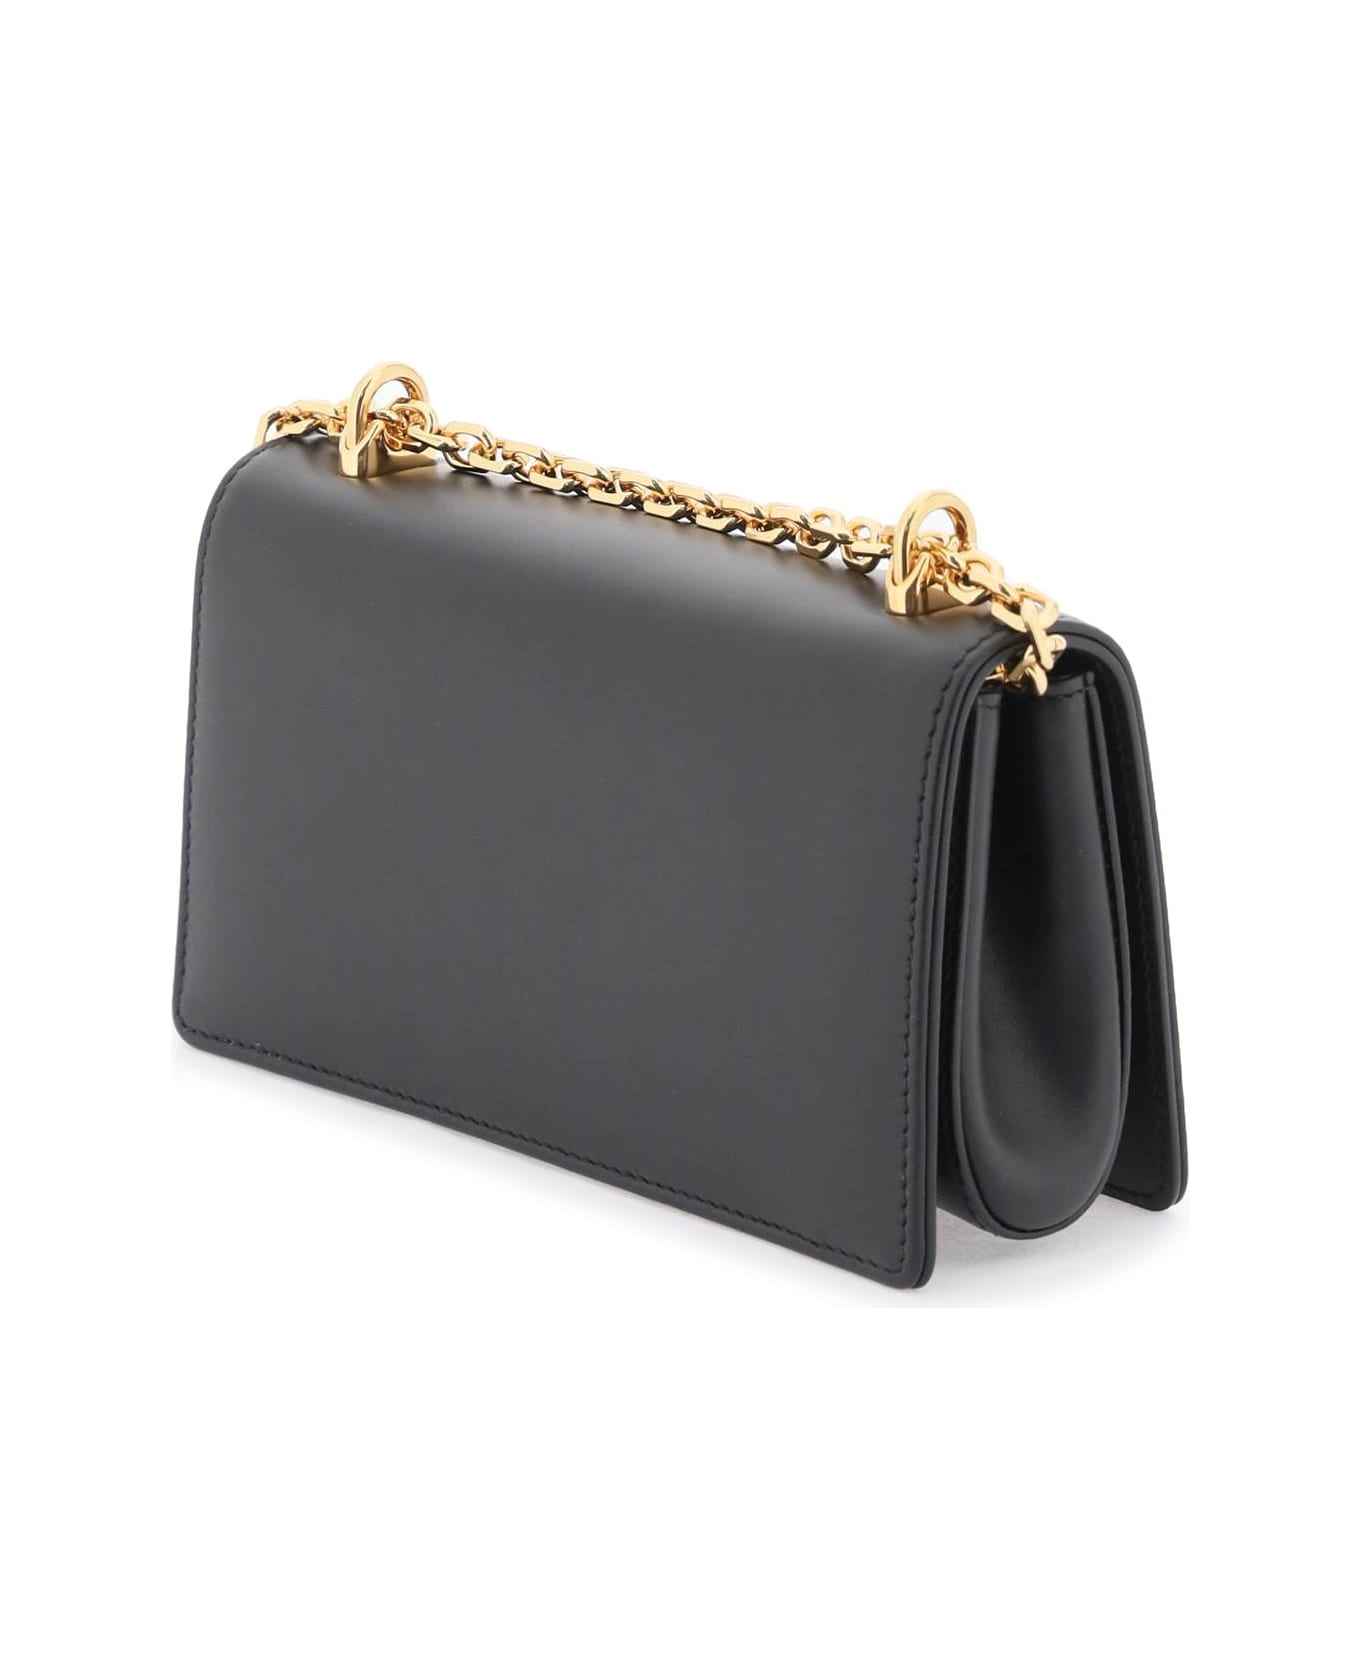 Dolce & Gabbana Dg Girls Phone Bag - NERO (Black) デジタルアクセサリー